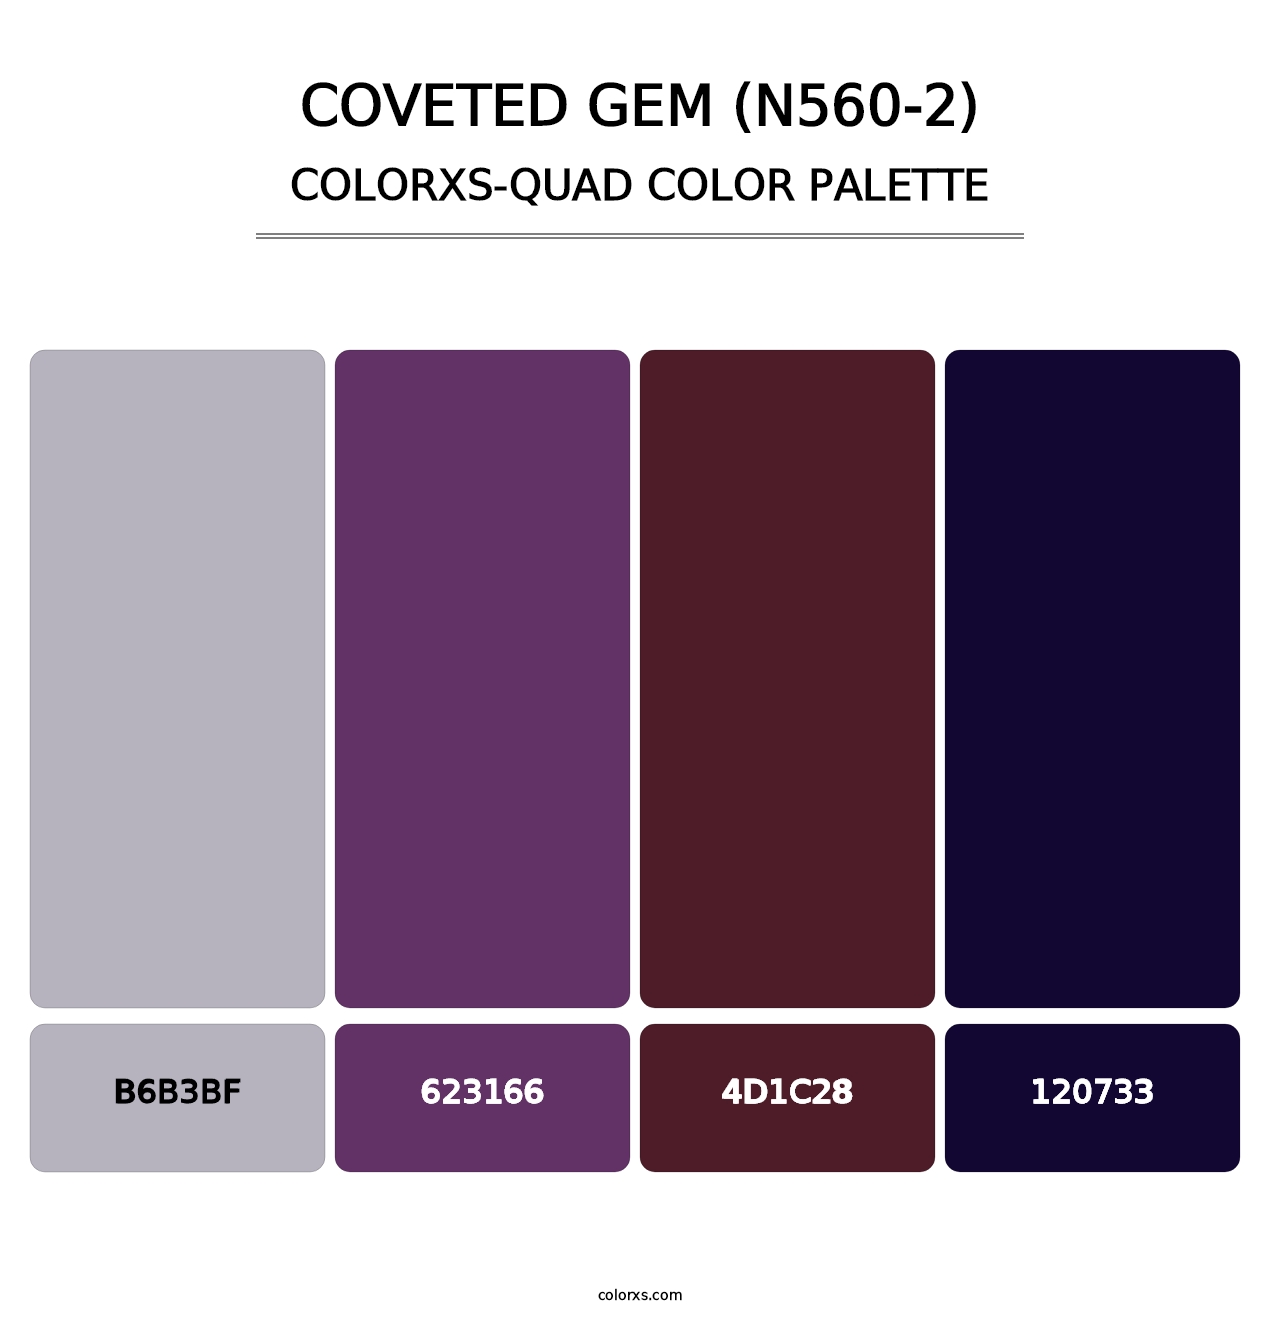 Coveted Gem (N560-2) - Colorxs Quad Palette